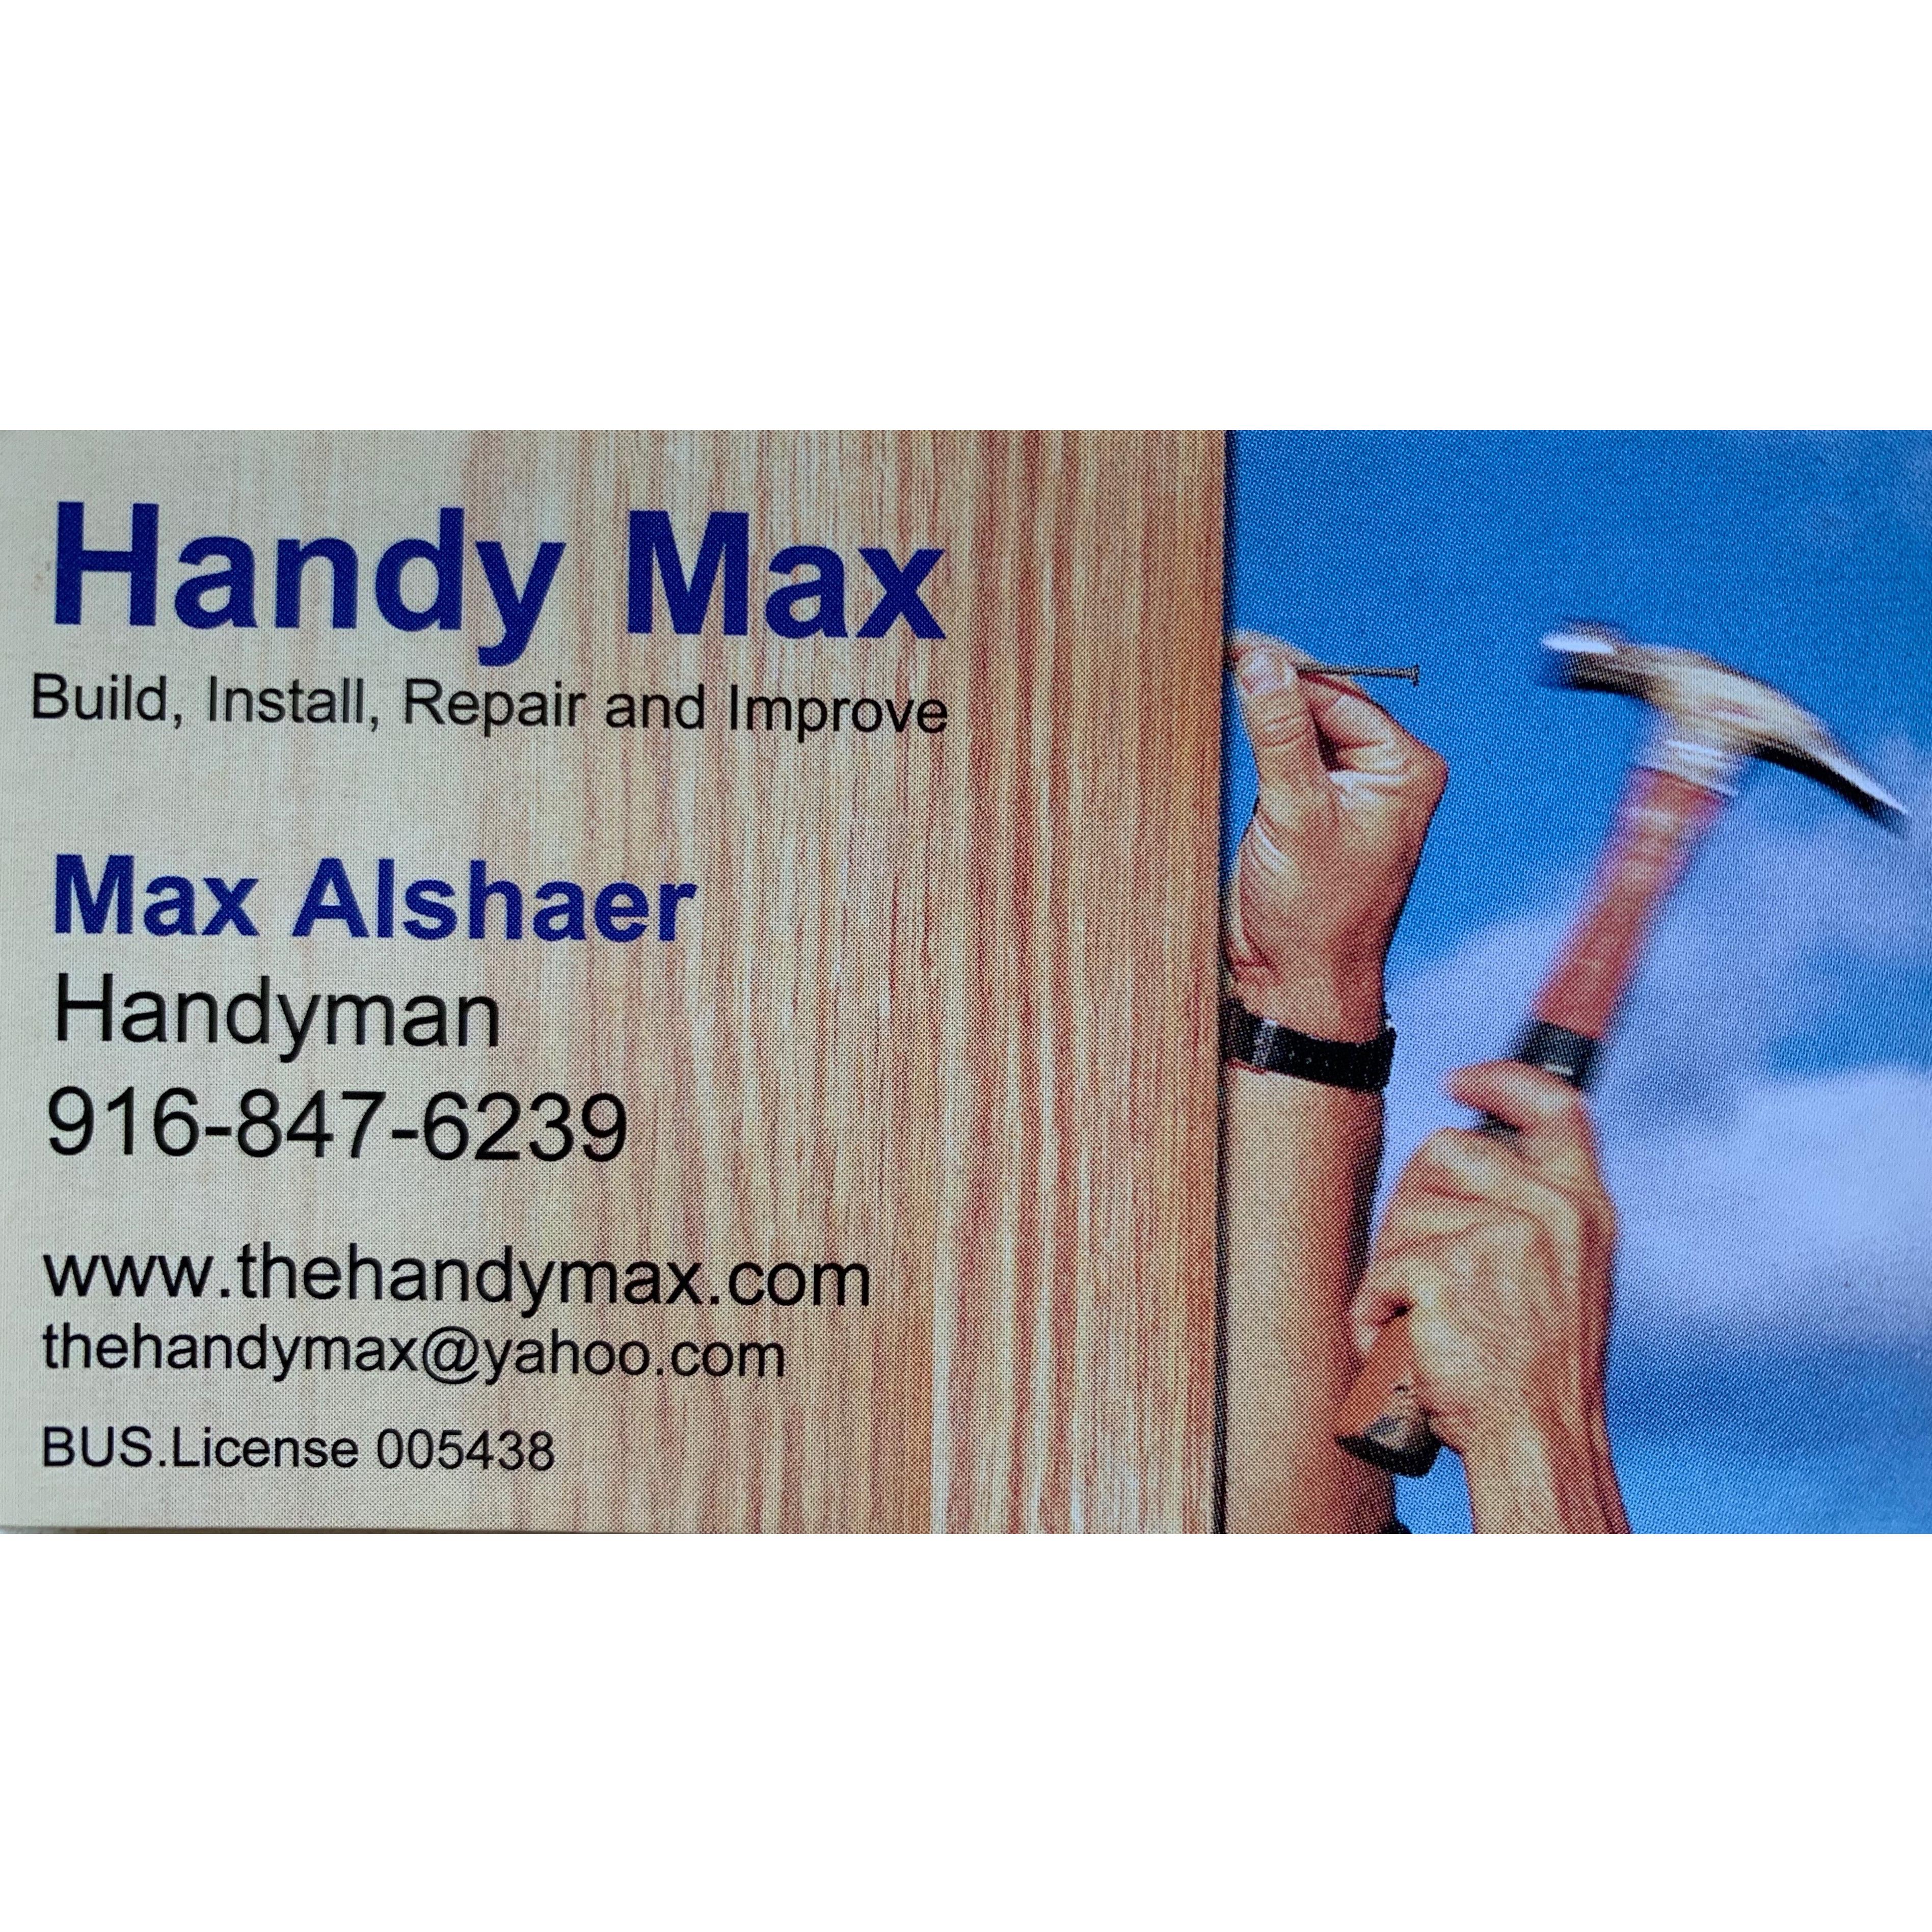 HandyMax Photo